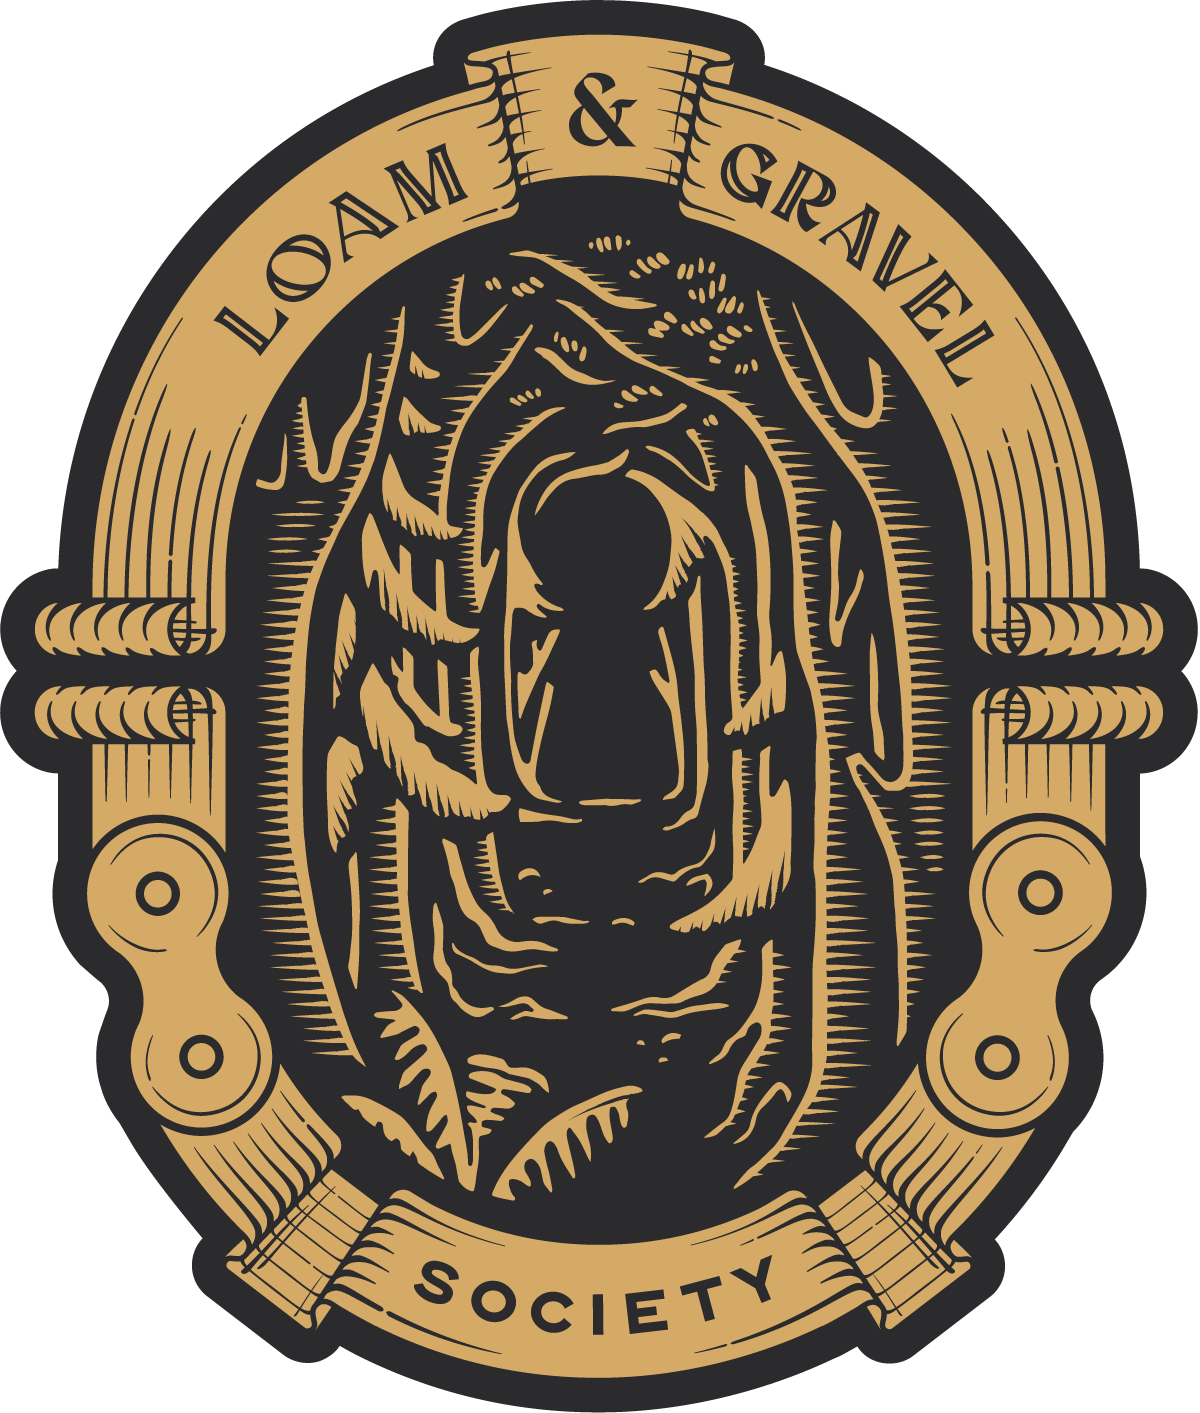 The Loam and Gravel Society Logo